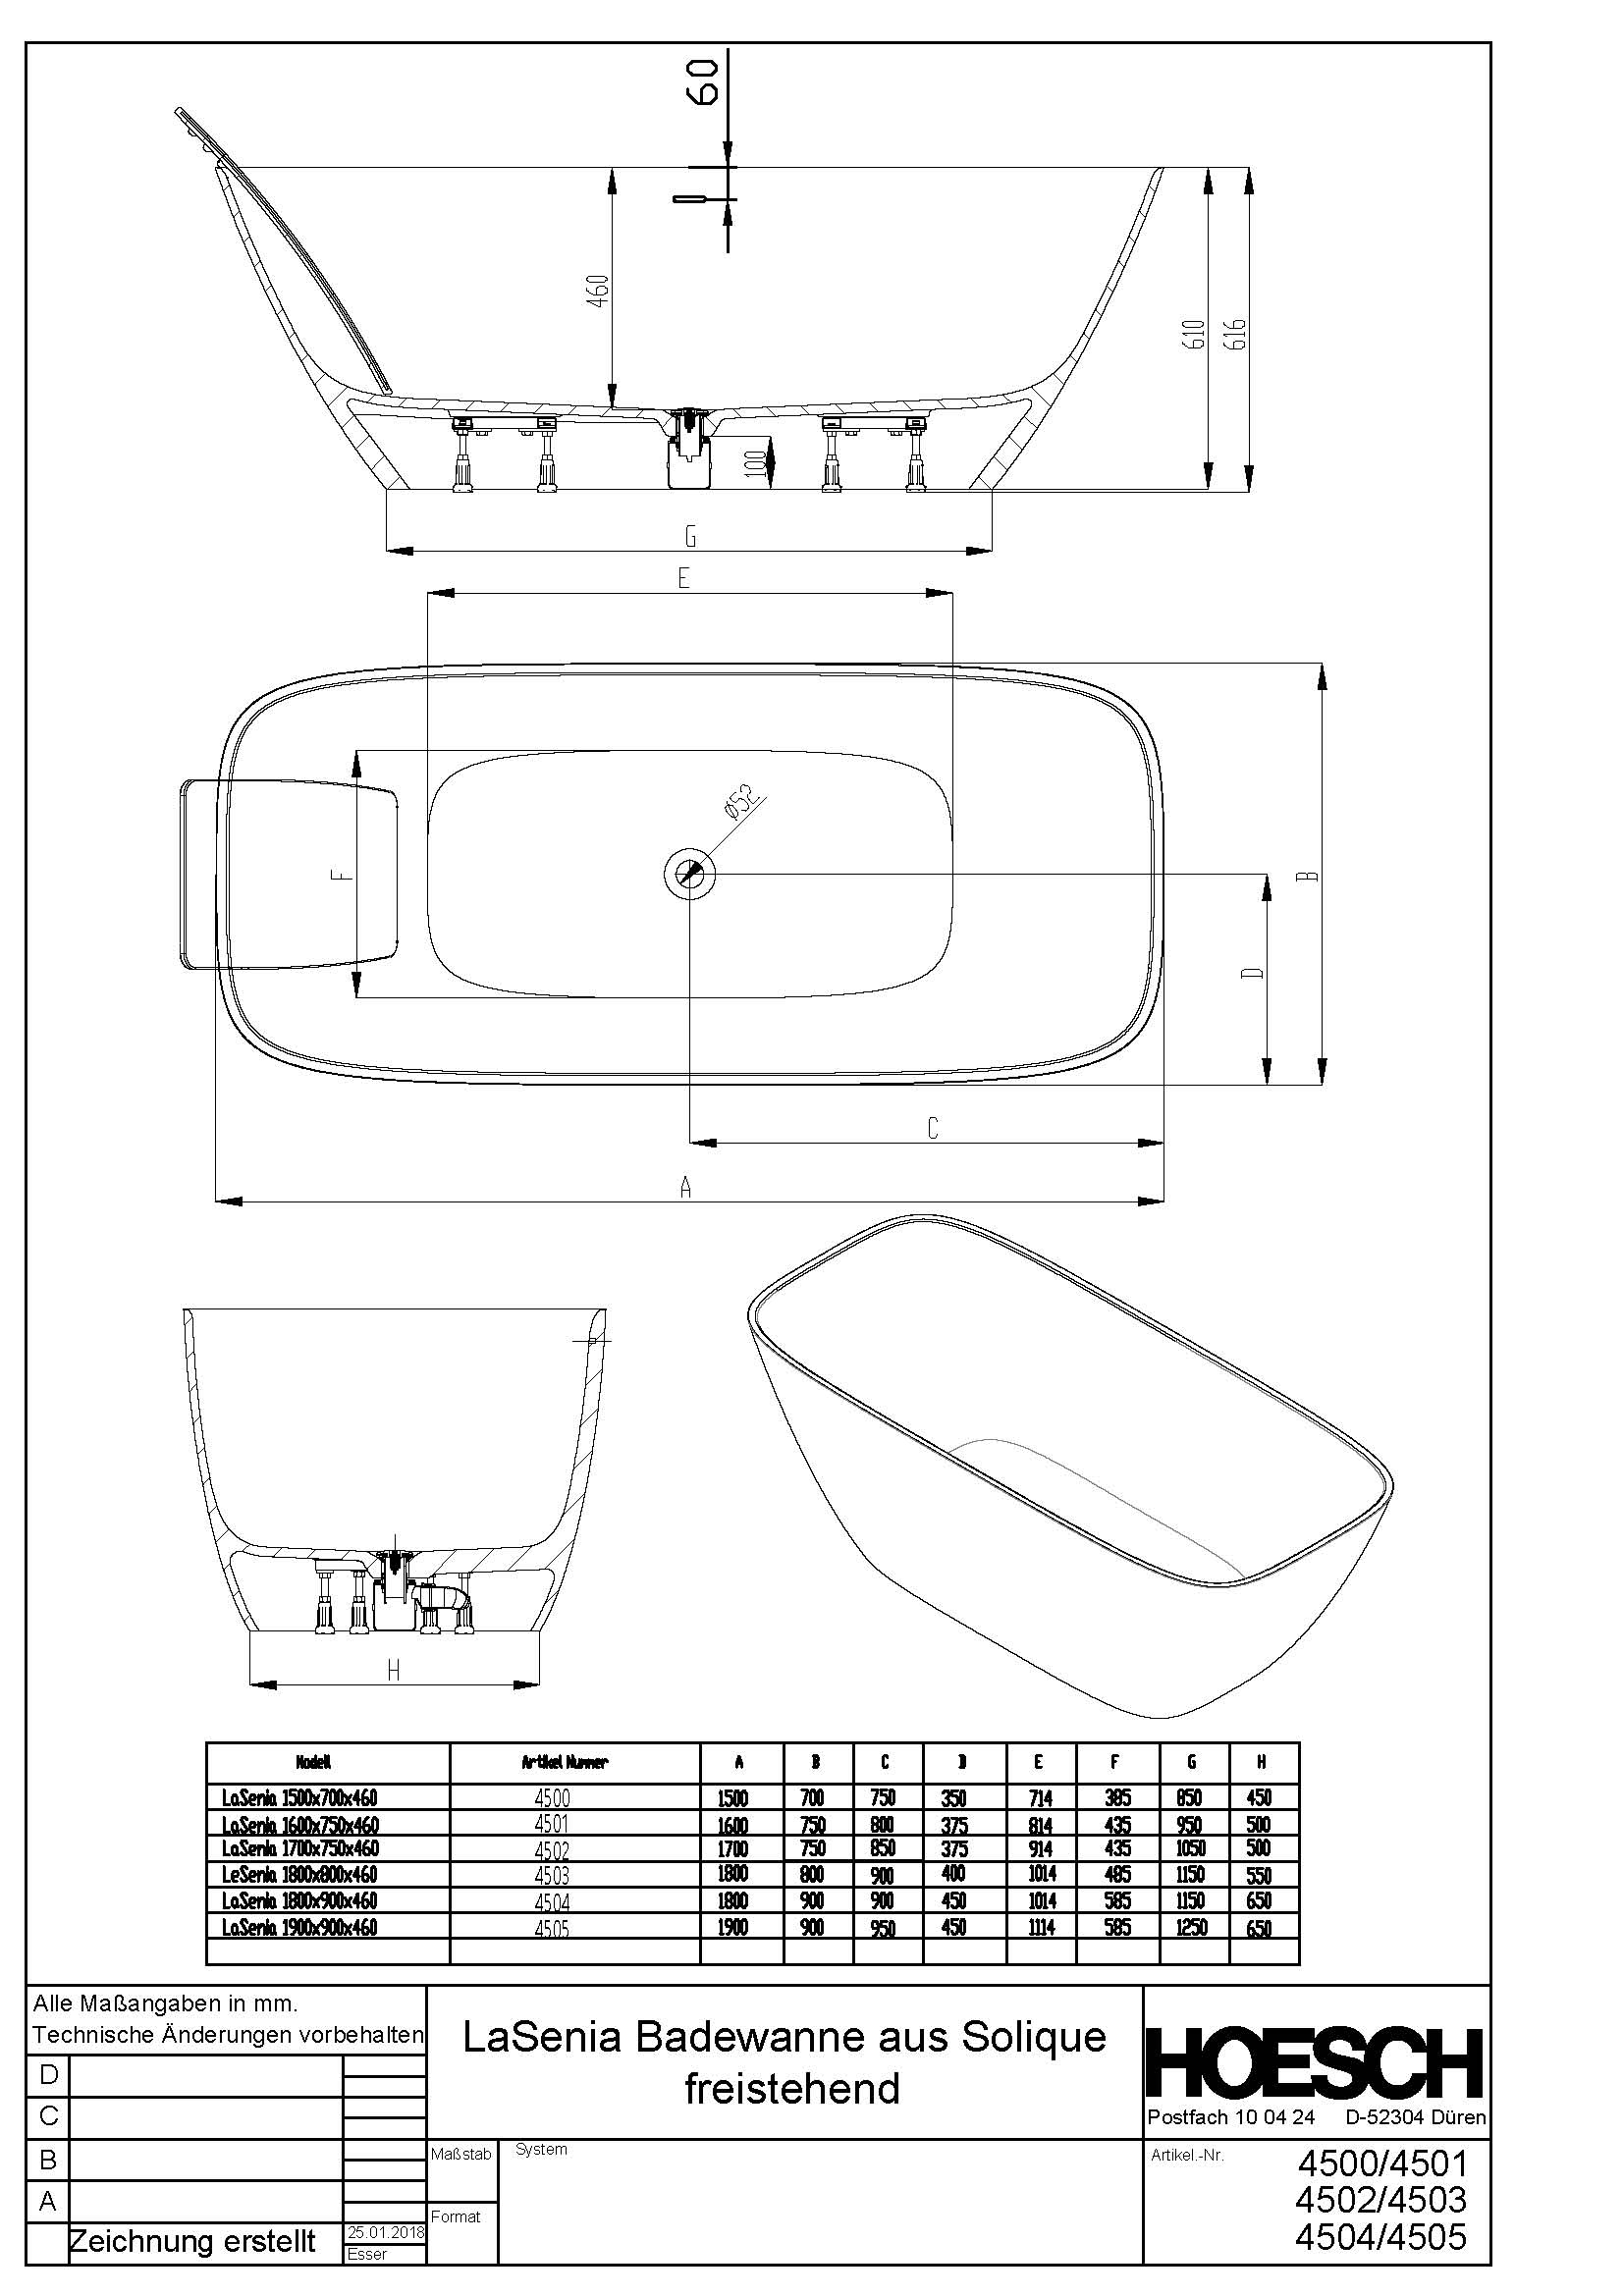 Hoesch Badewanne „Lasenia“ freistehend oval 180 × 80 cm in Weiß